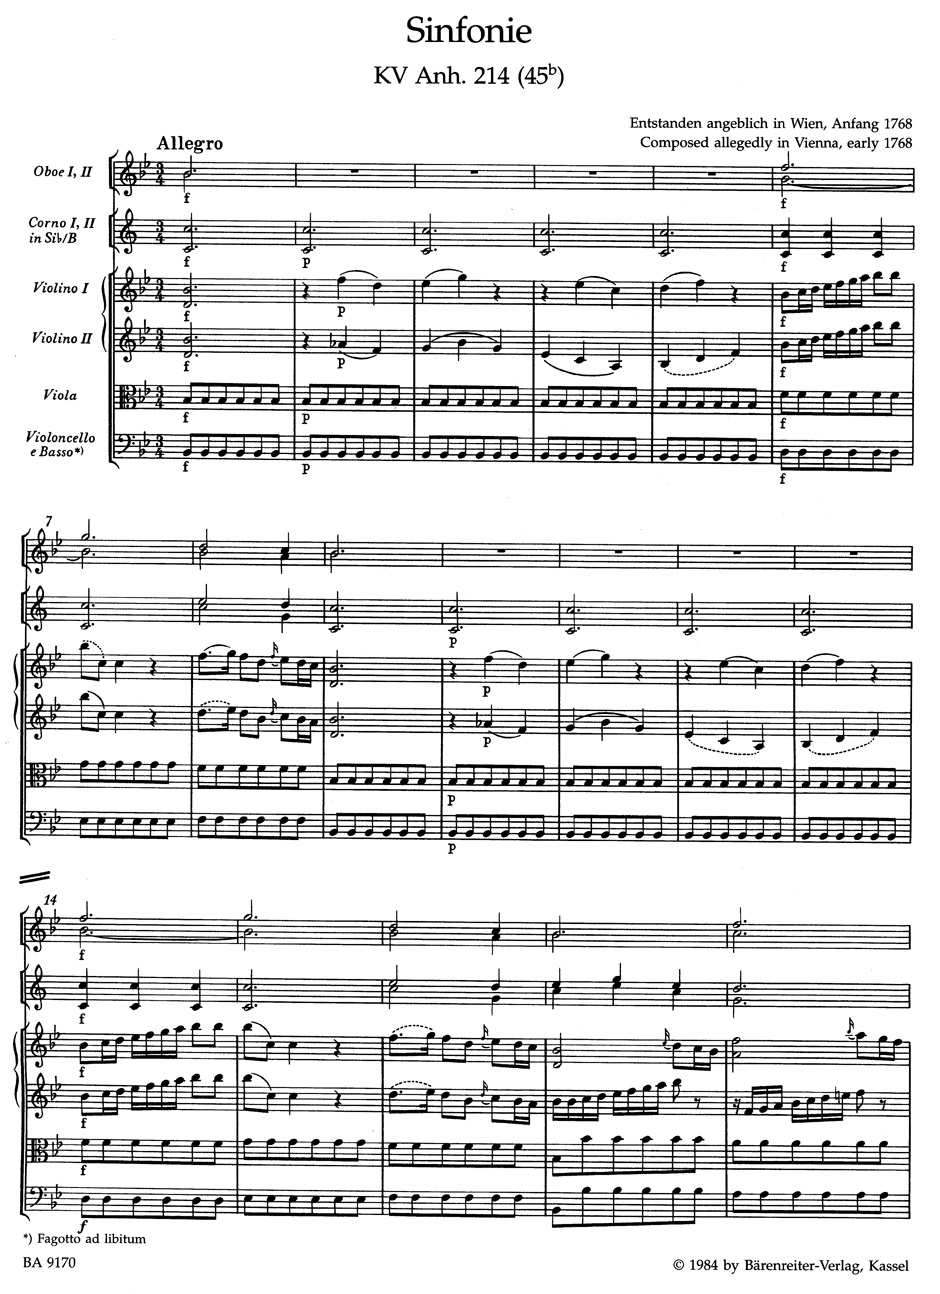 wolfgang-amadeus-mozart-sinfonie-kv-anh-214-45b-b-_0006.JPG